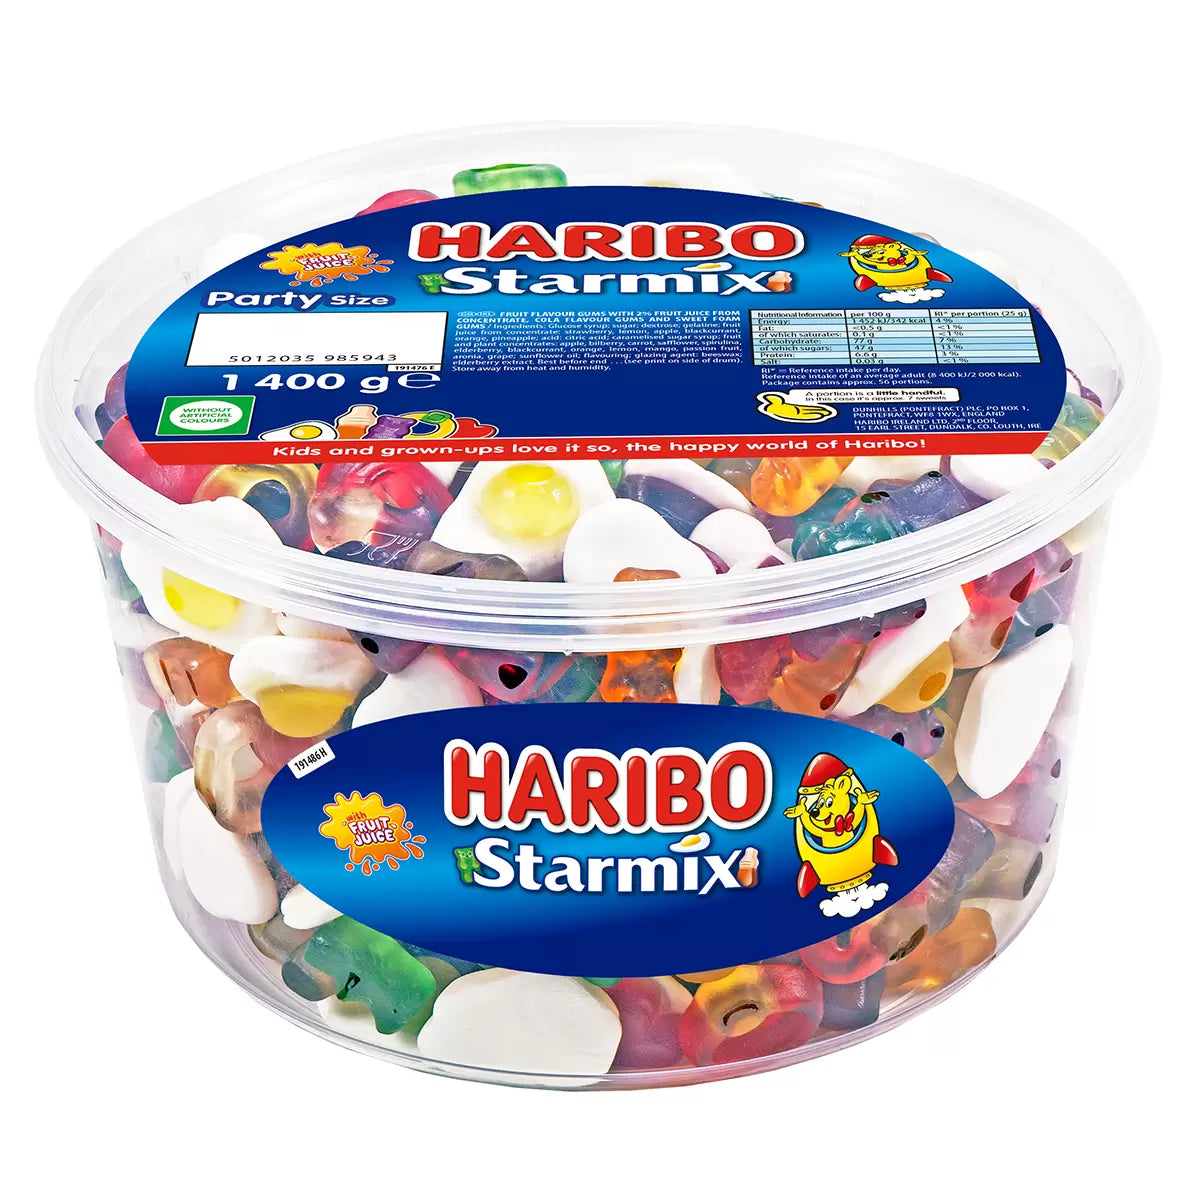 Haribo Starmix Party Size - 1400g